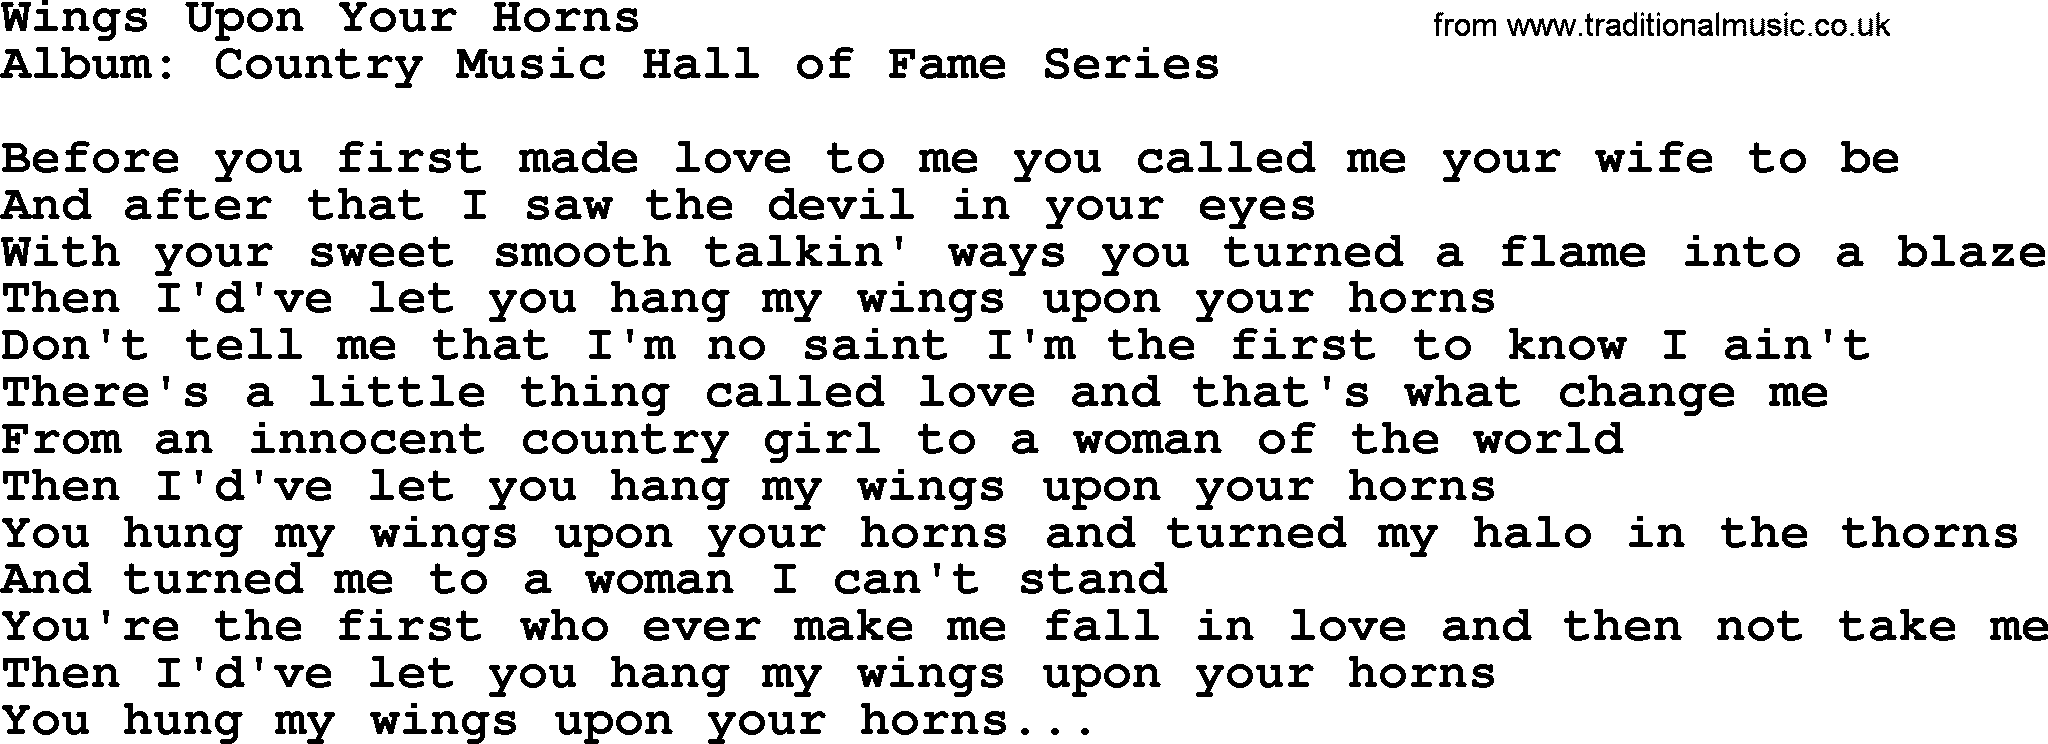 Loretta Lynn song: Wings Upon Your Horns lyrics